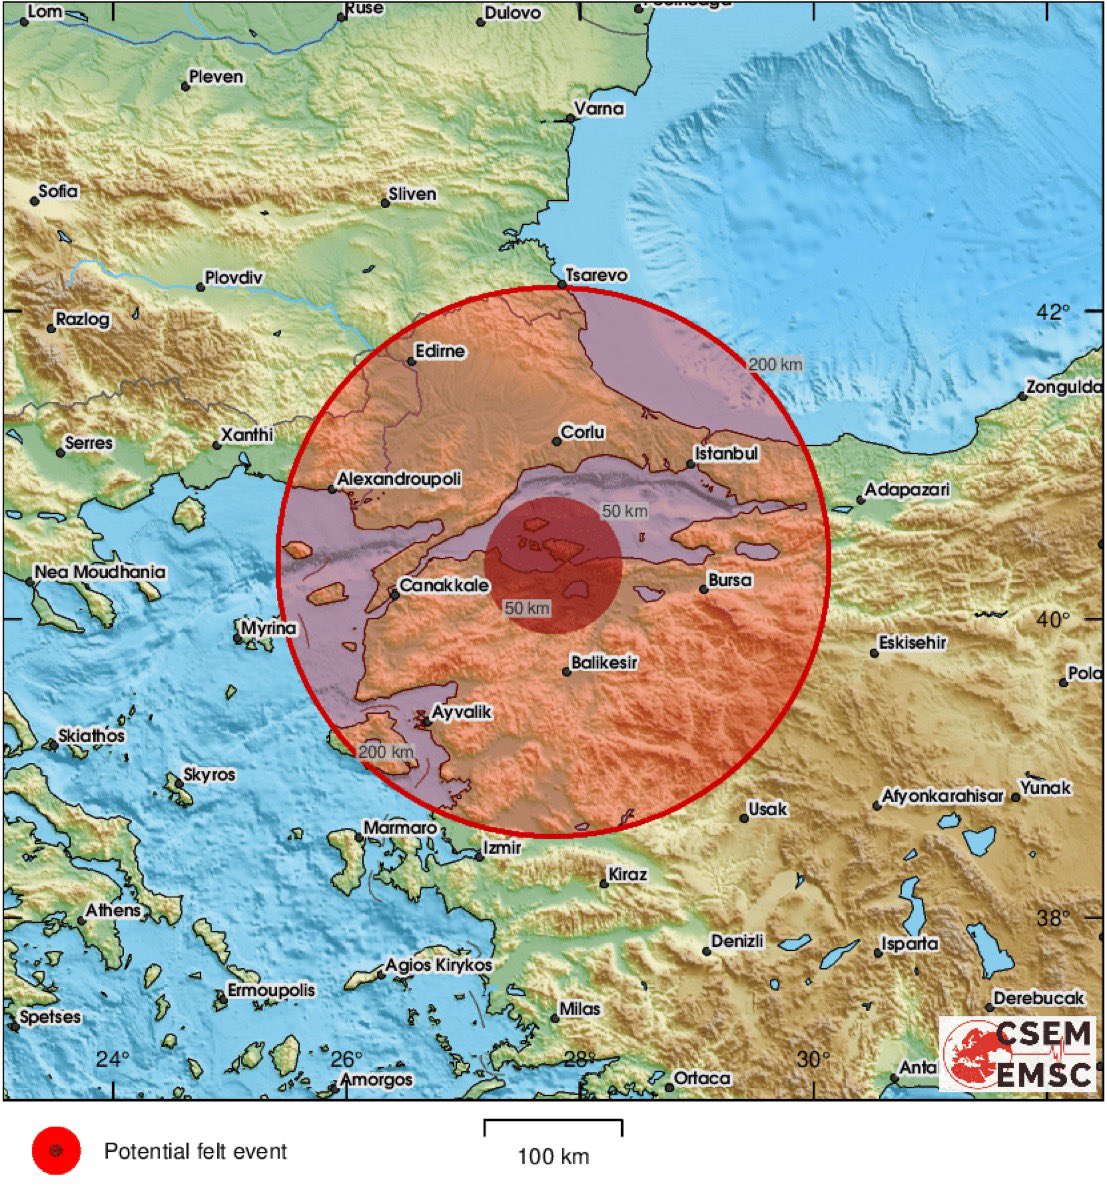 4.2 Magnitude Earthquake occurred in the Marmara Sea (EMSC)